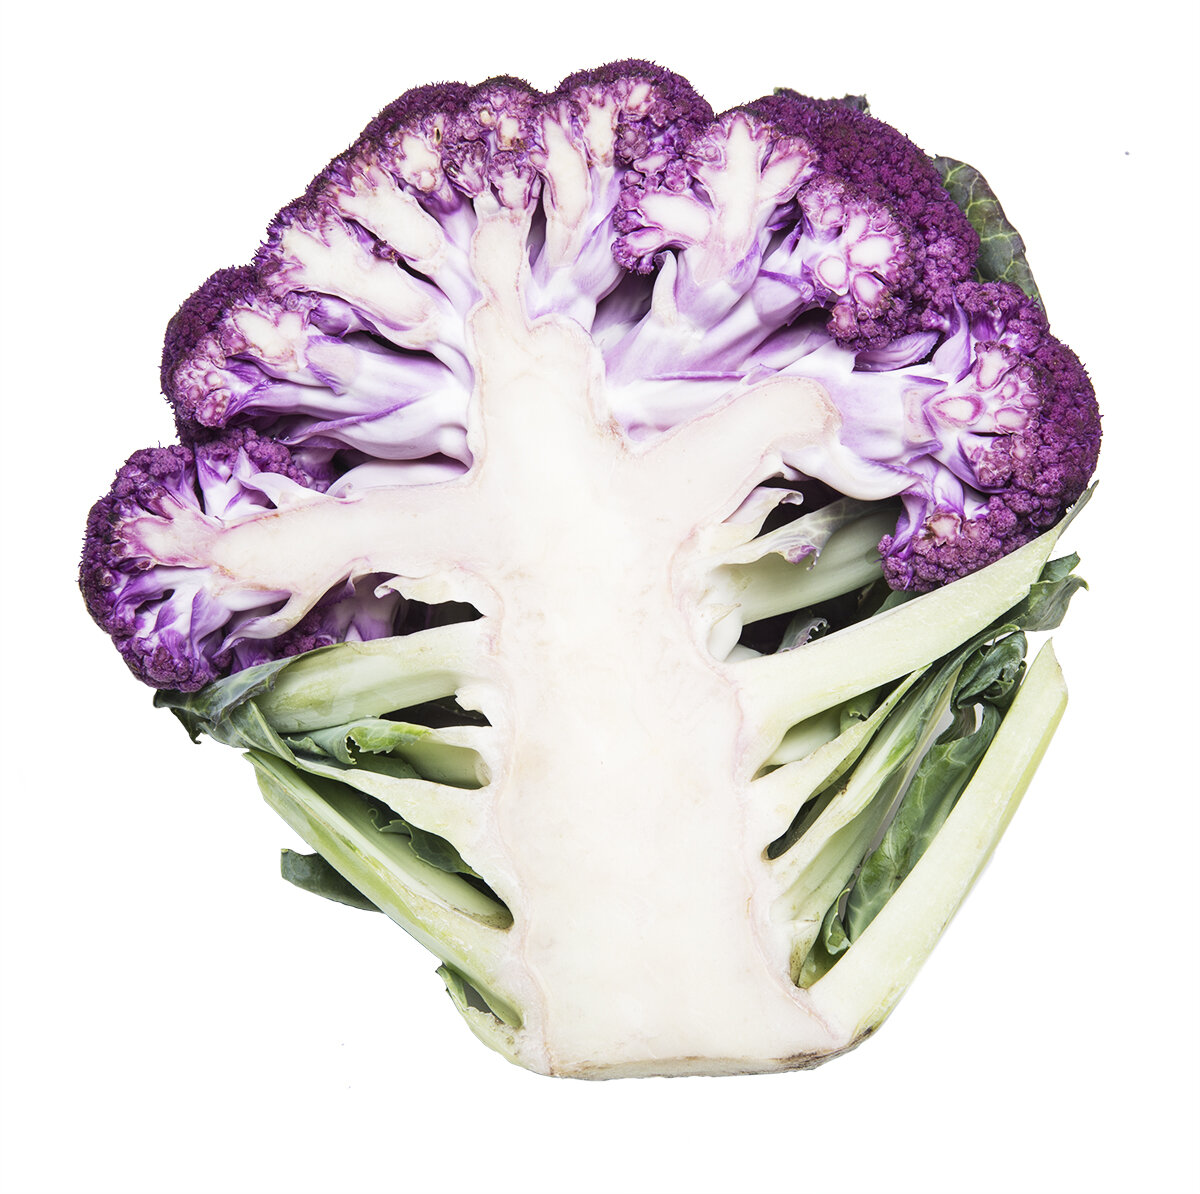 purple_cauliflower copy 2.jpg